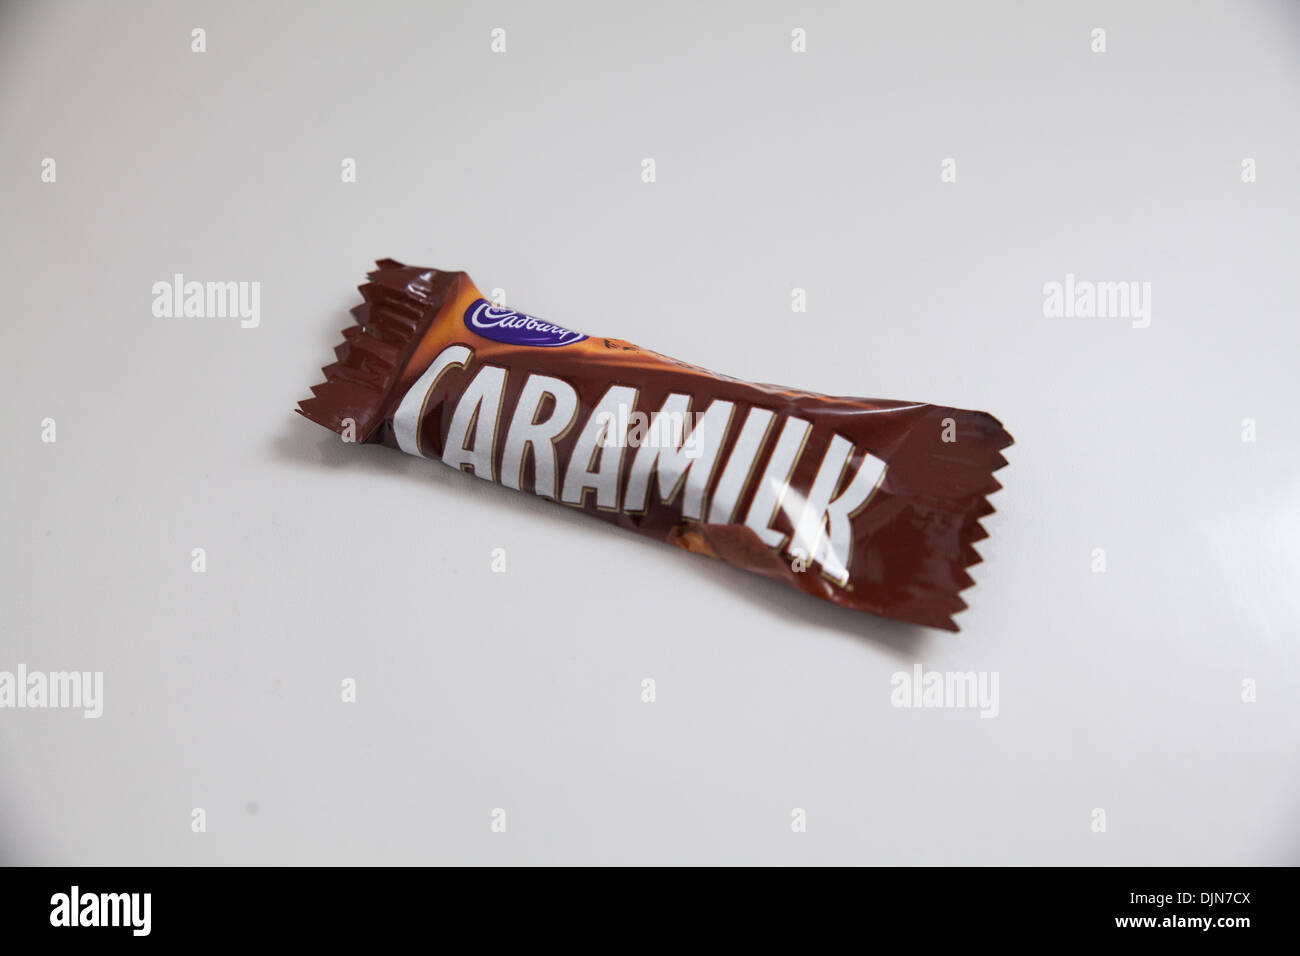 Caramilk chocolate candy bar Stock Photo